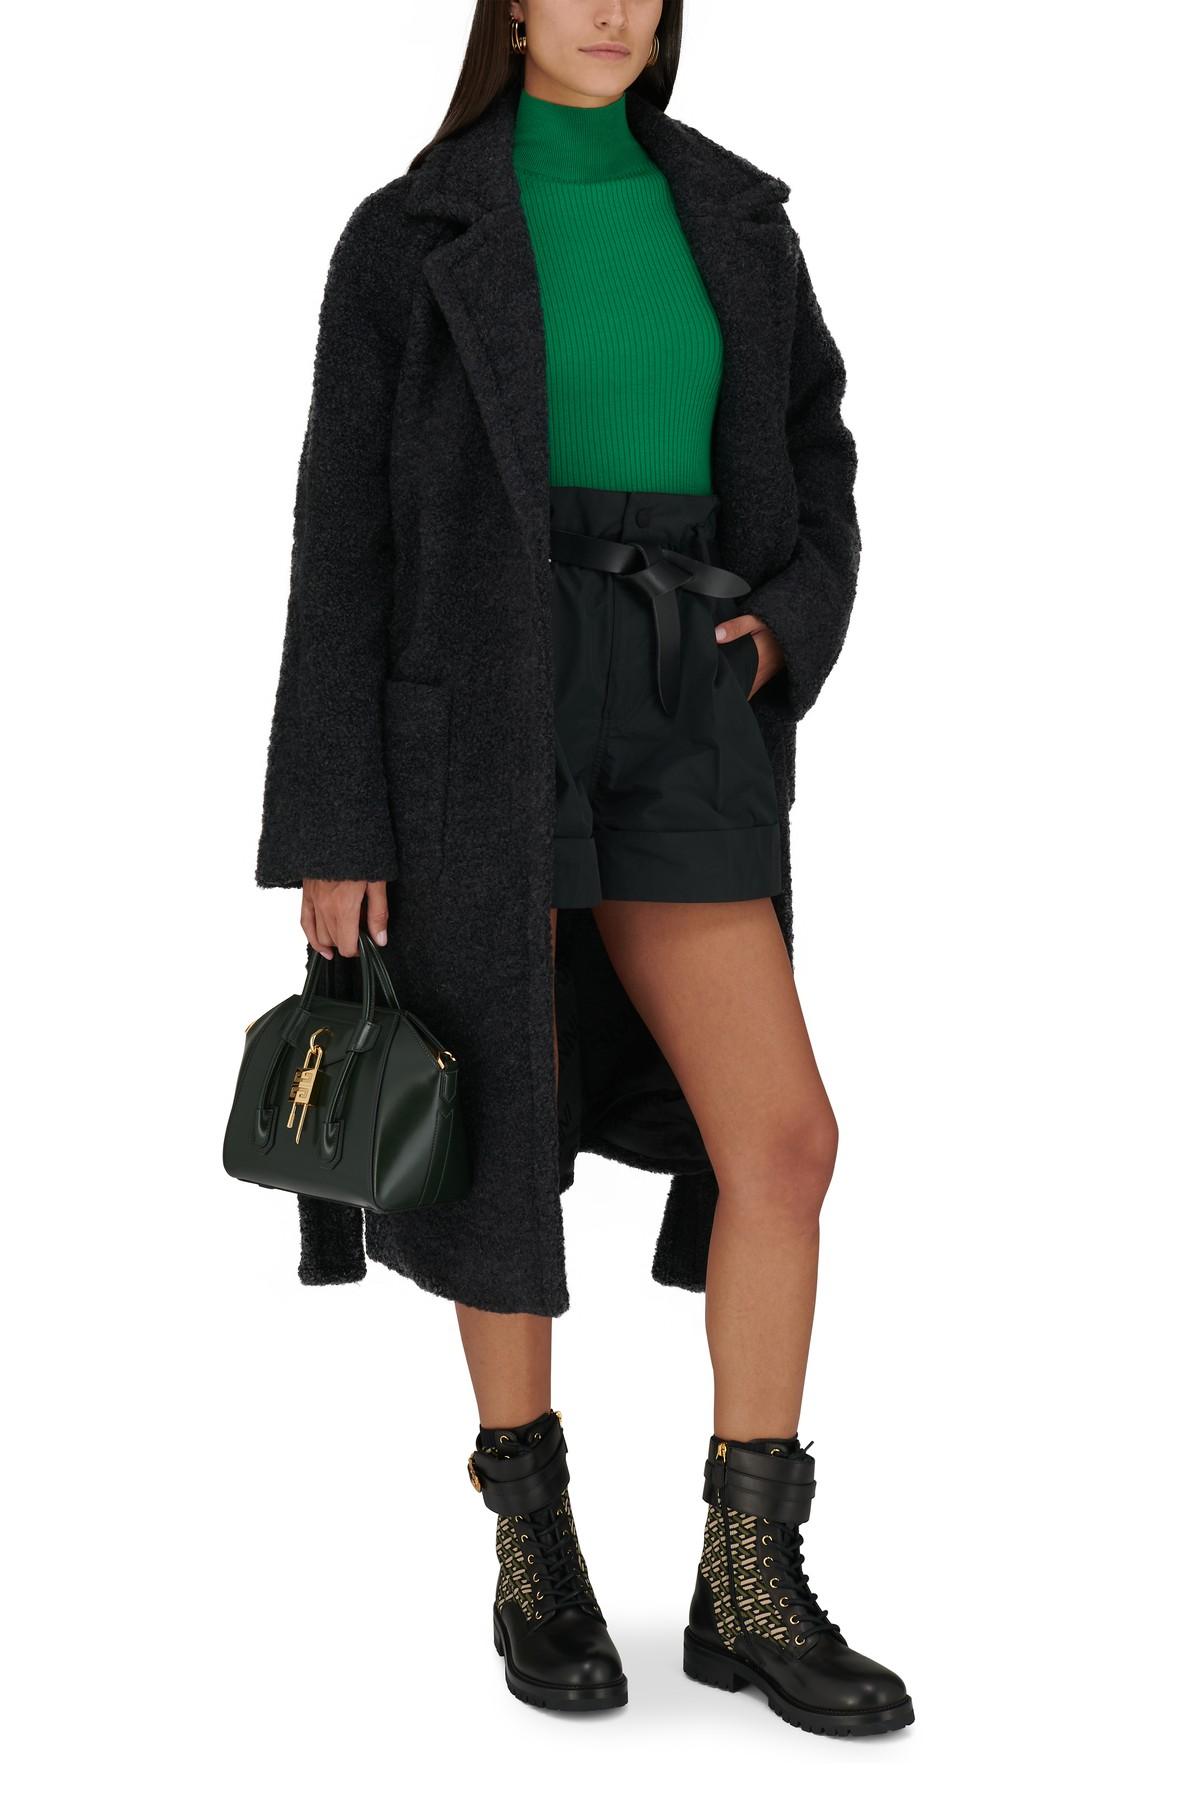 Givenchy Mini Antigona Bag in Box leather